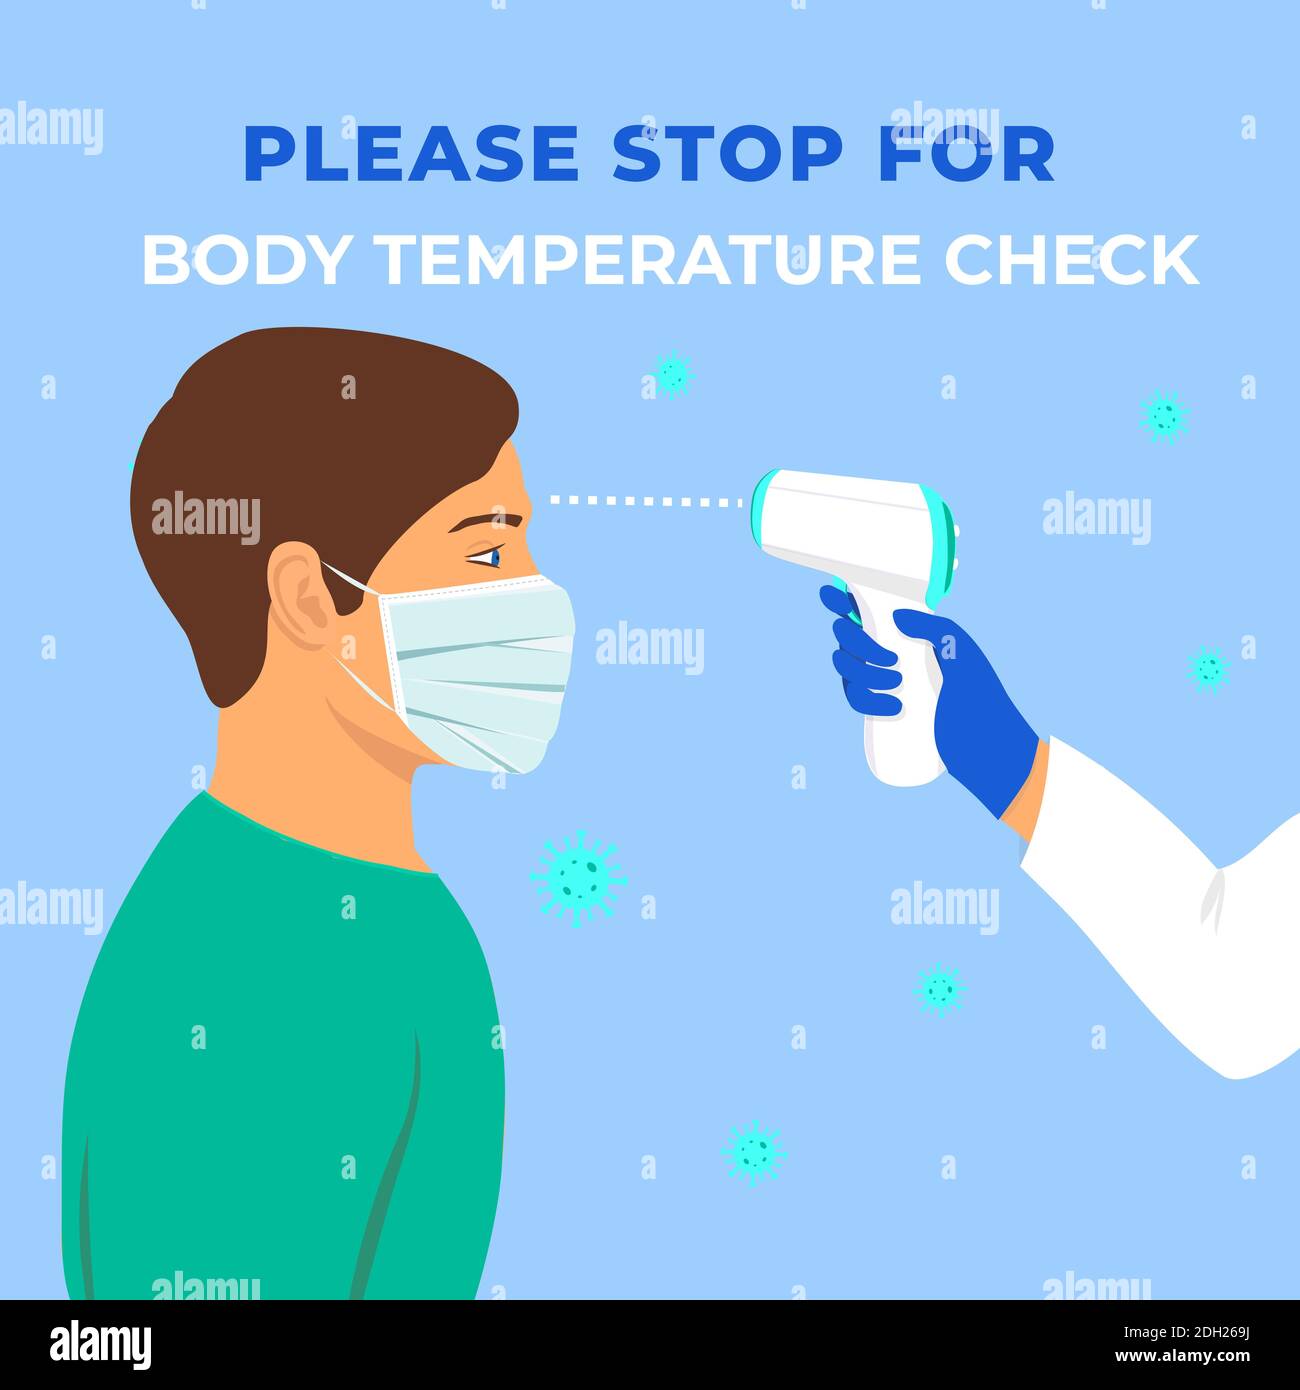 Body temperature check required sign Coronavirus pandemic prevention. Stock Vector